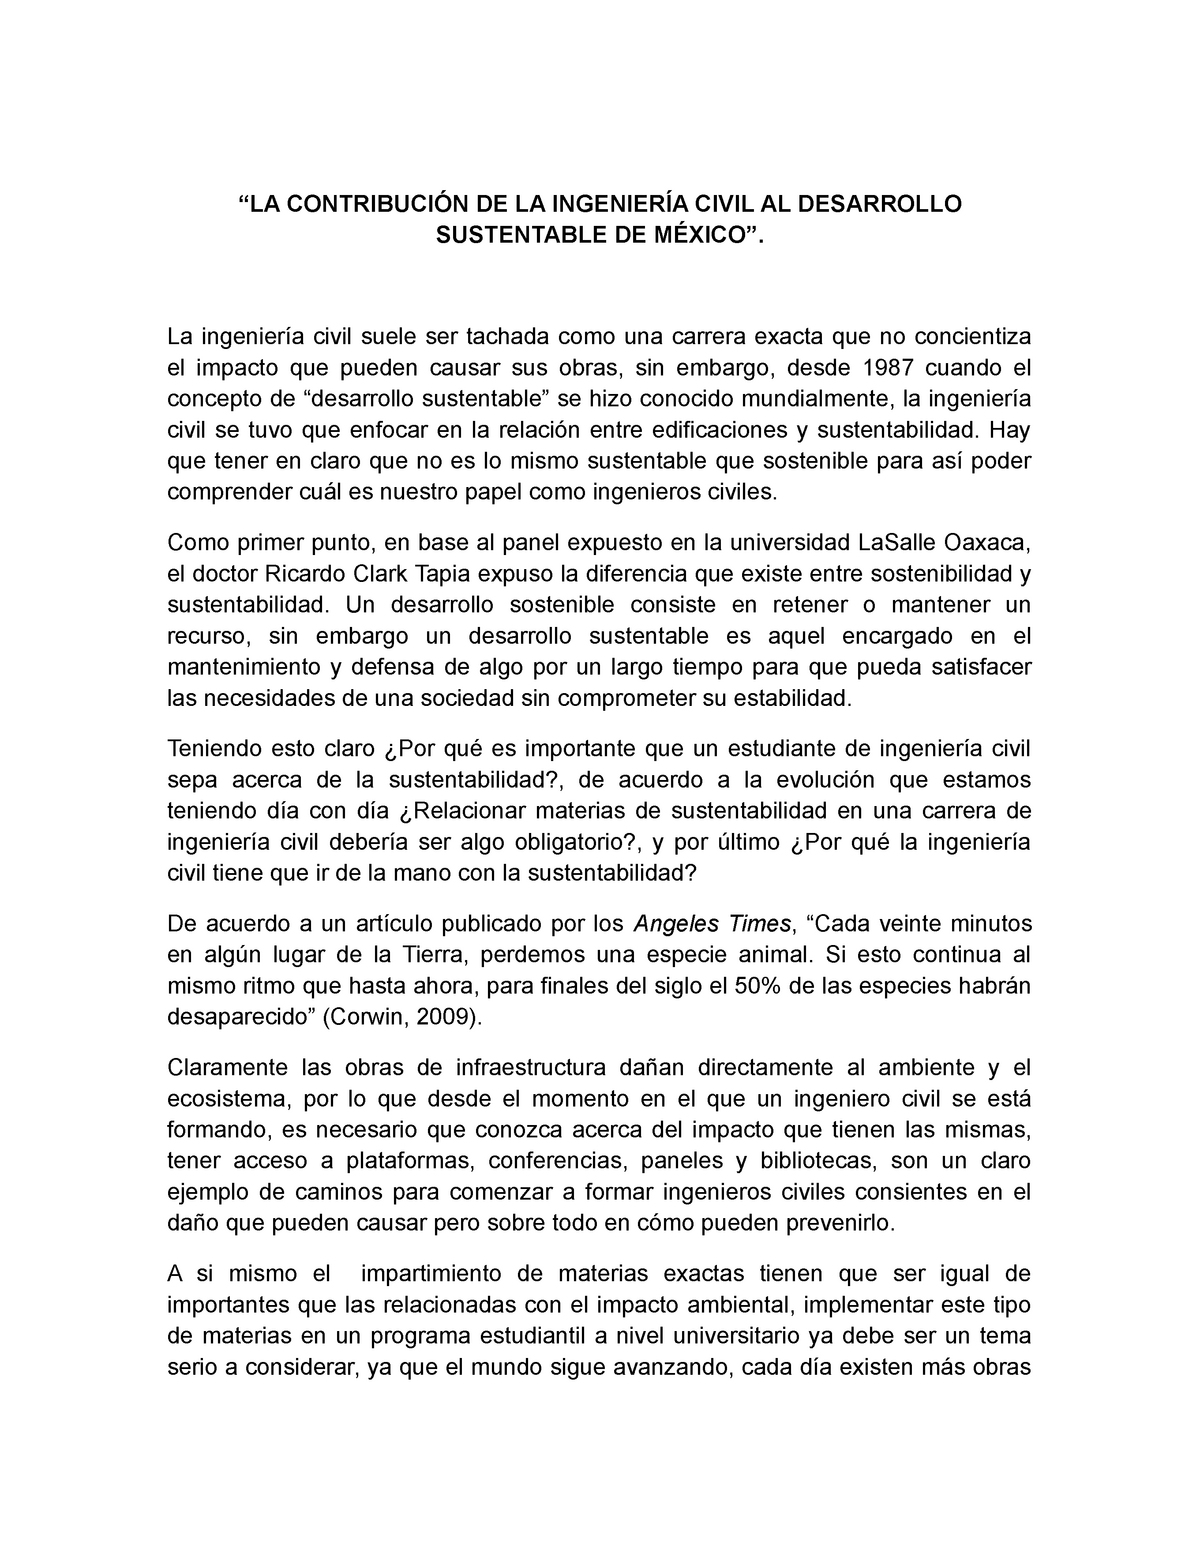 La Contribucion De La Ing Civil Al Des Sust De Mexico Studocu